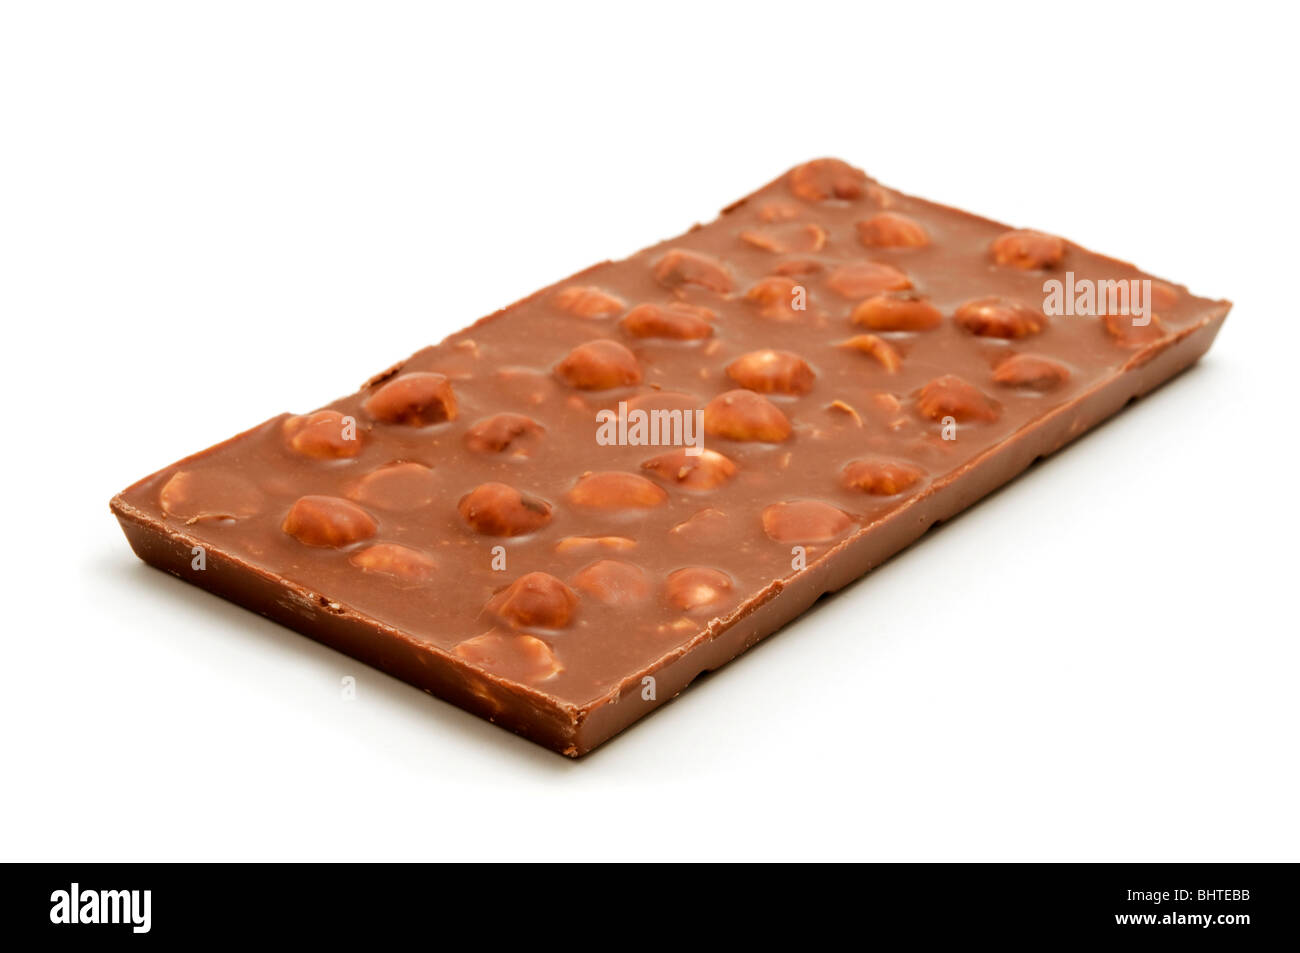 Milk chocolate with hazelnuts on a white background Stock Photo